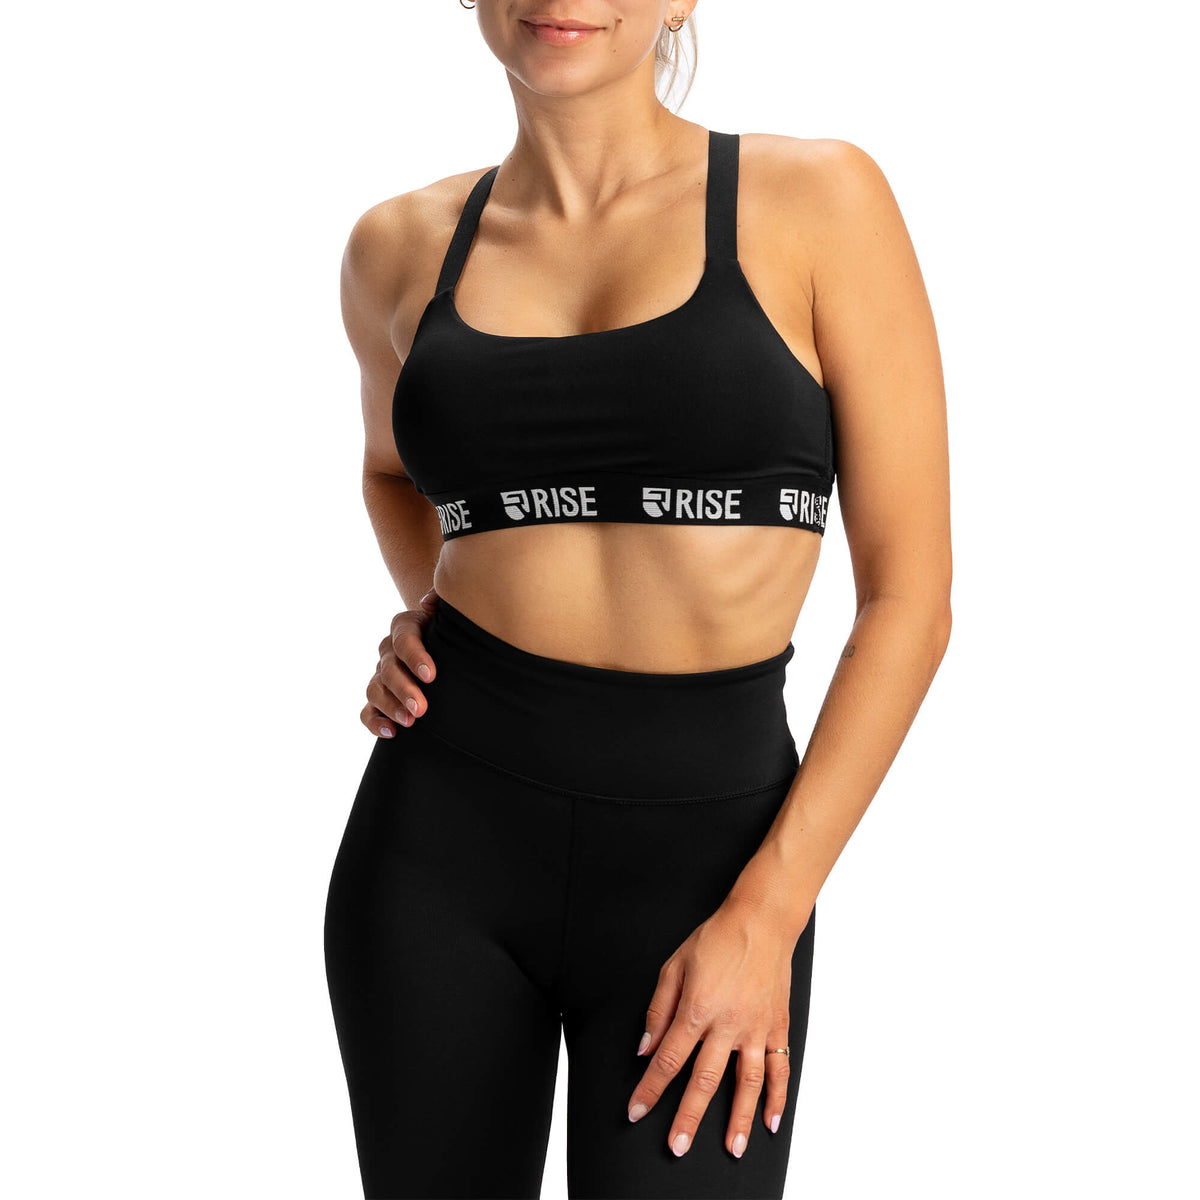 Buy Fashiol Front Button Sports Bras for Traning,Yoga,Gym Workout, Feeding,  Nursing Black at